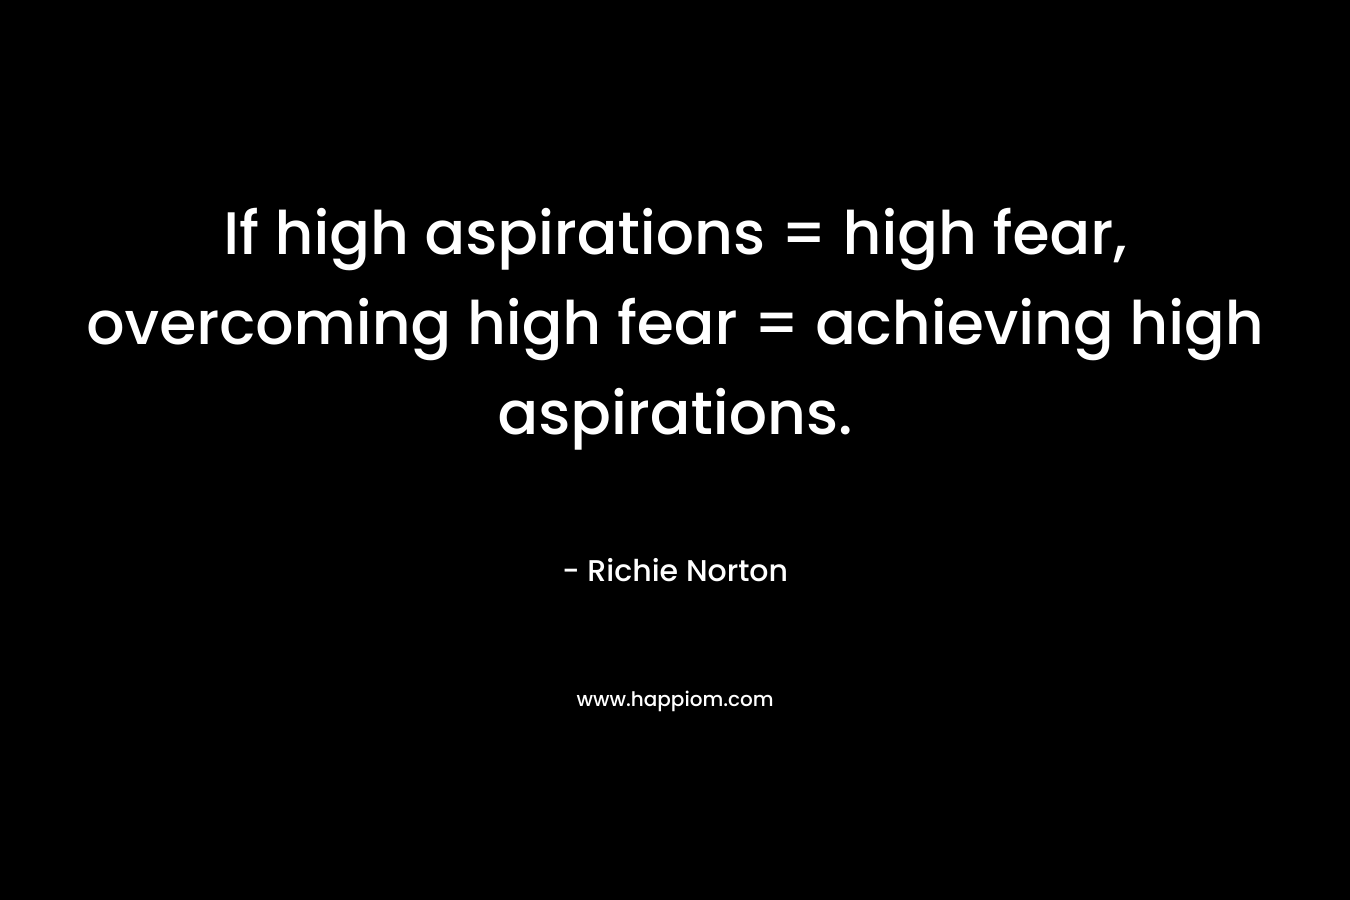 If high aspirations = high fear, overcoming high fear = achieving high aspirations.